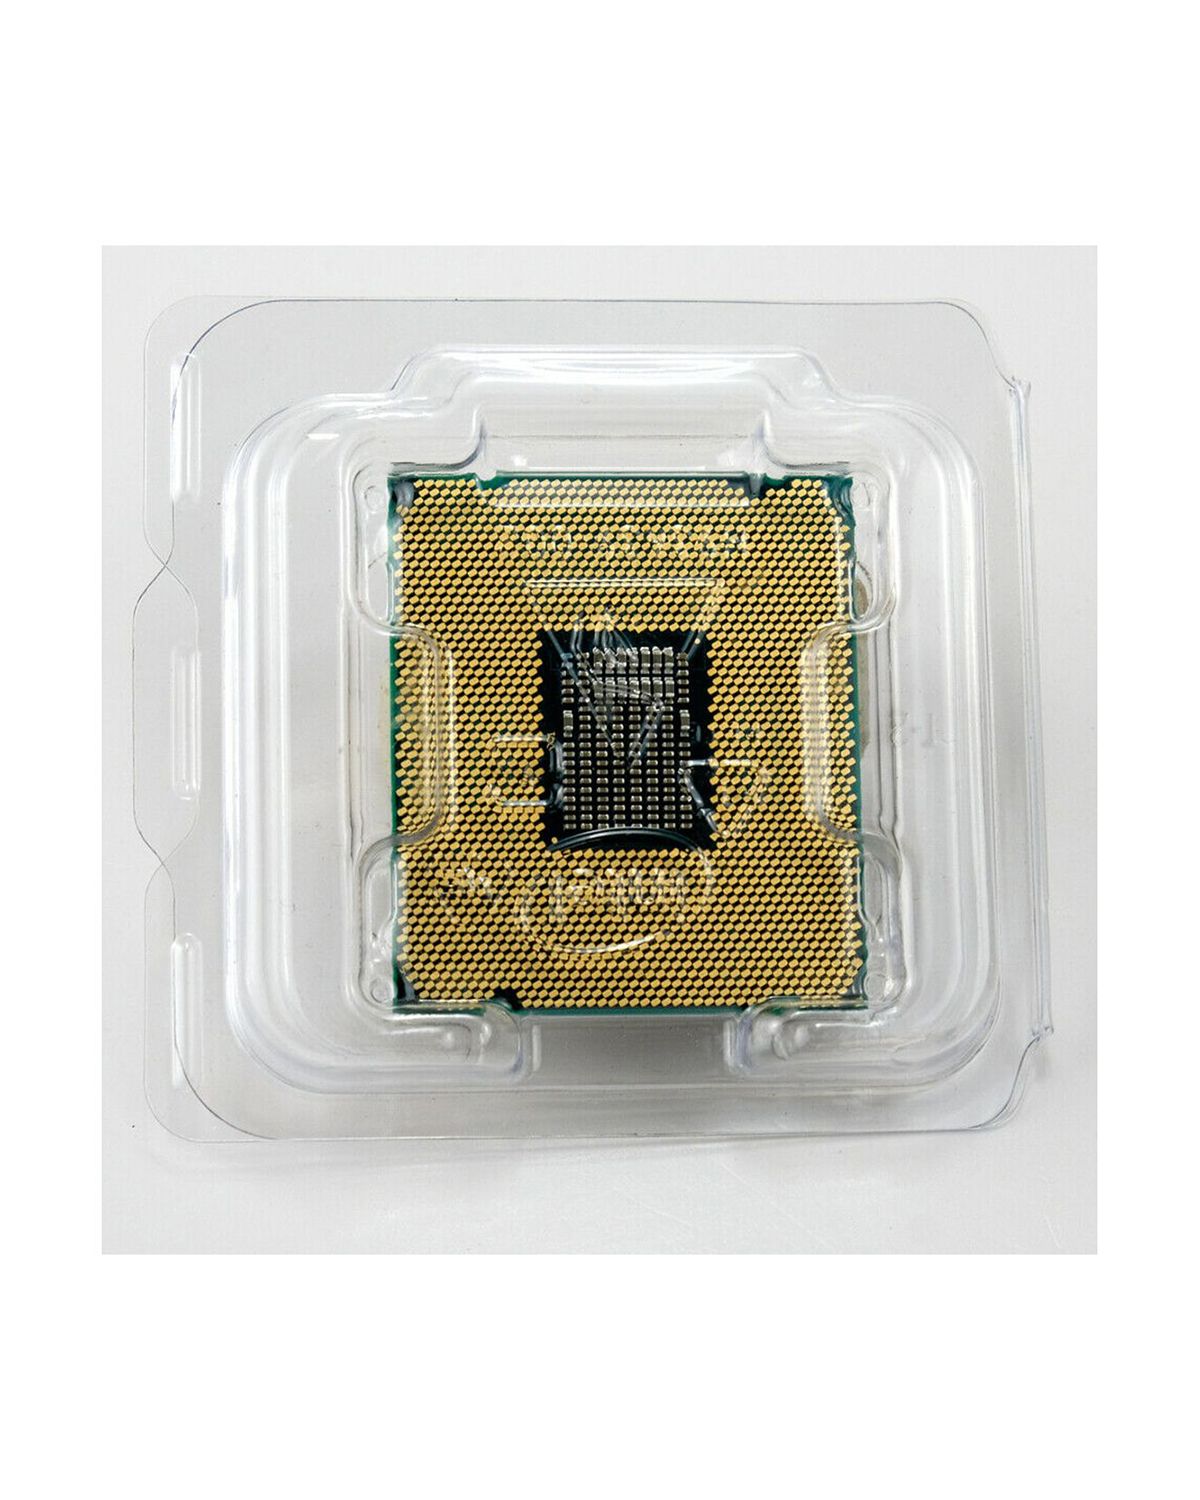 Intel Core i9-10980XE Extreme Edition Processor, 3 Nepal